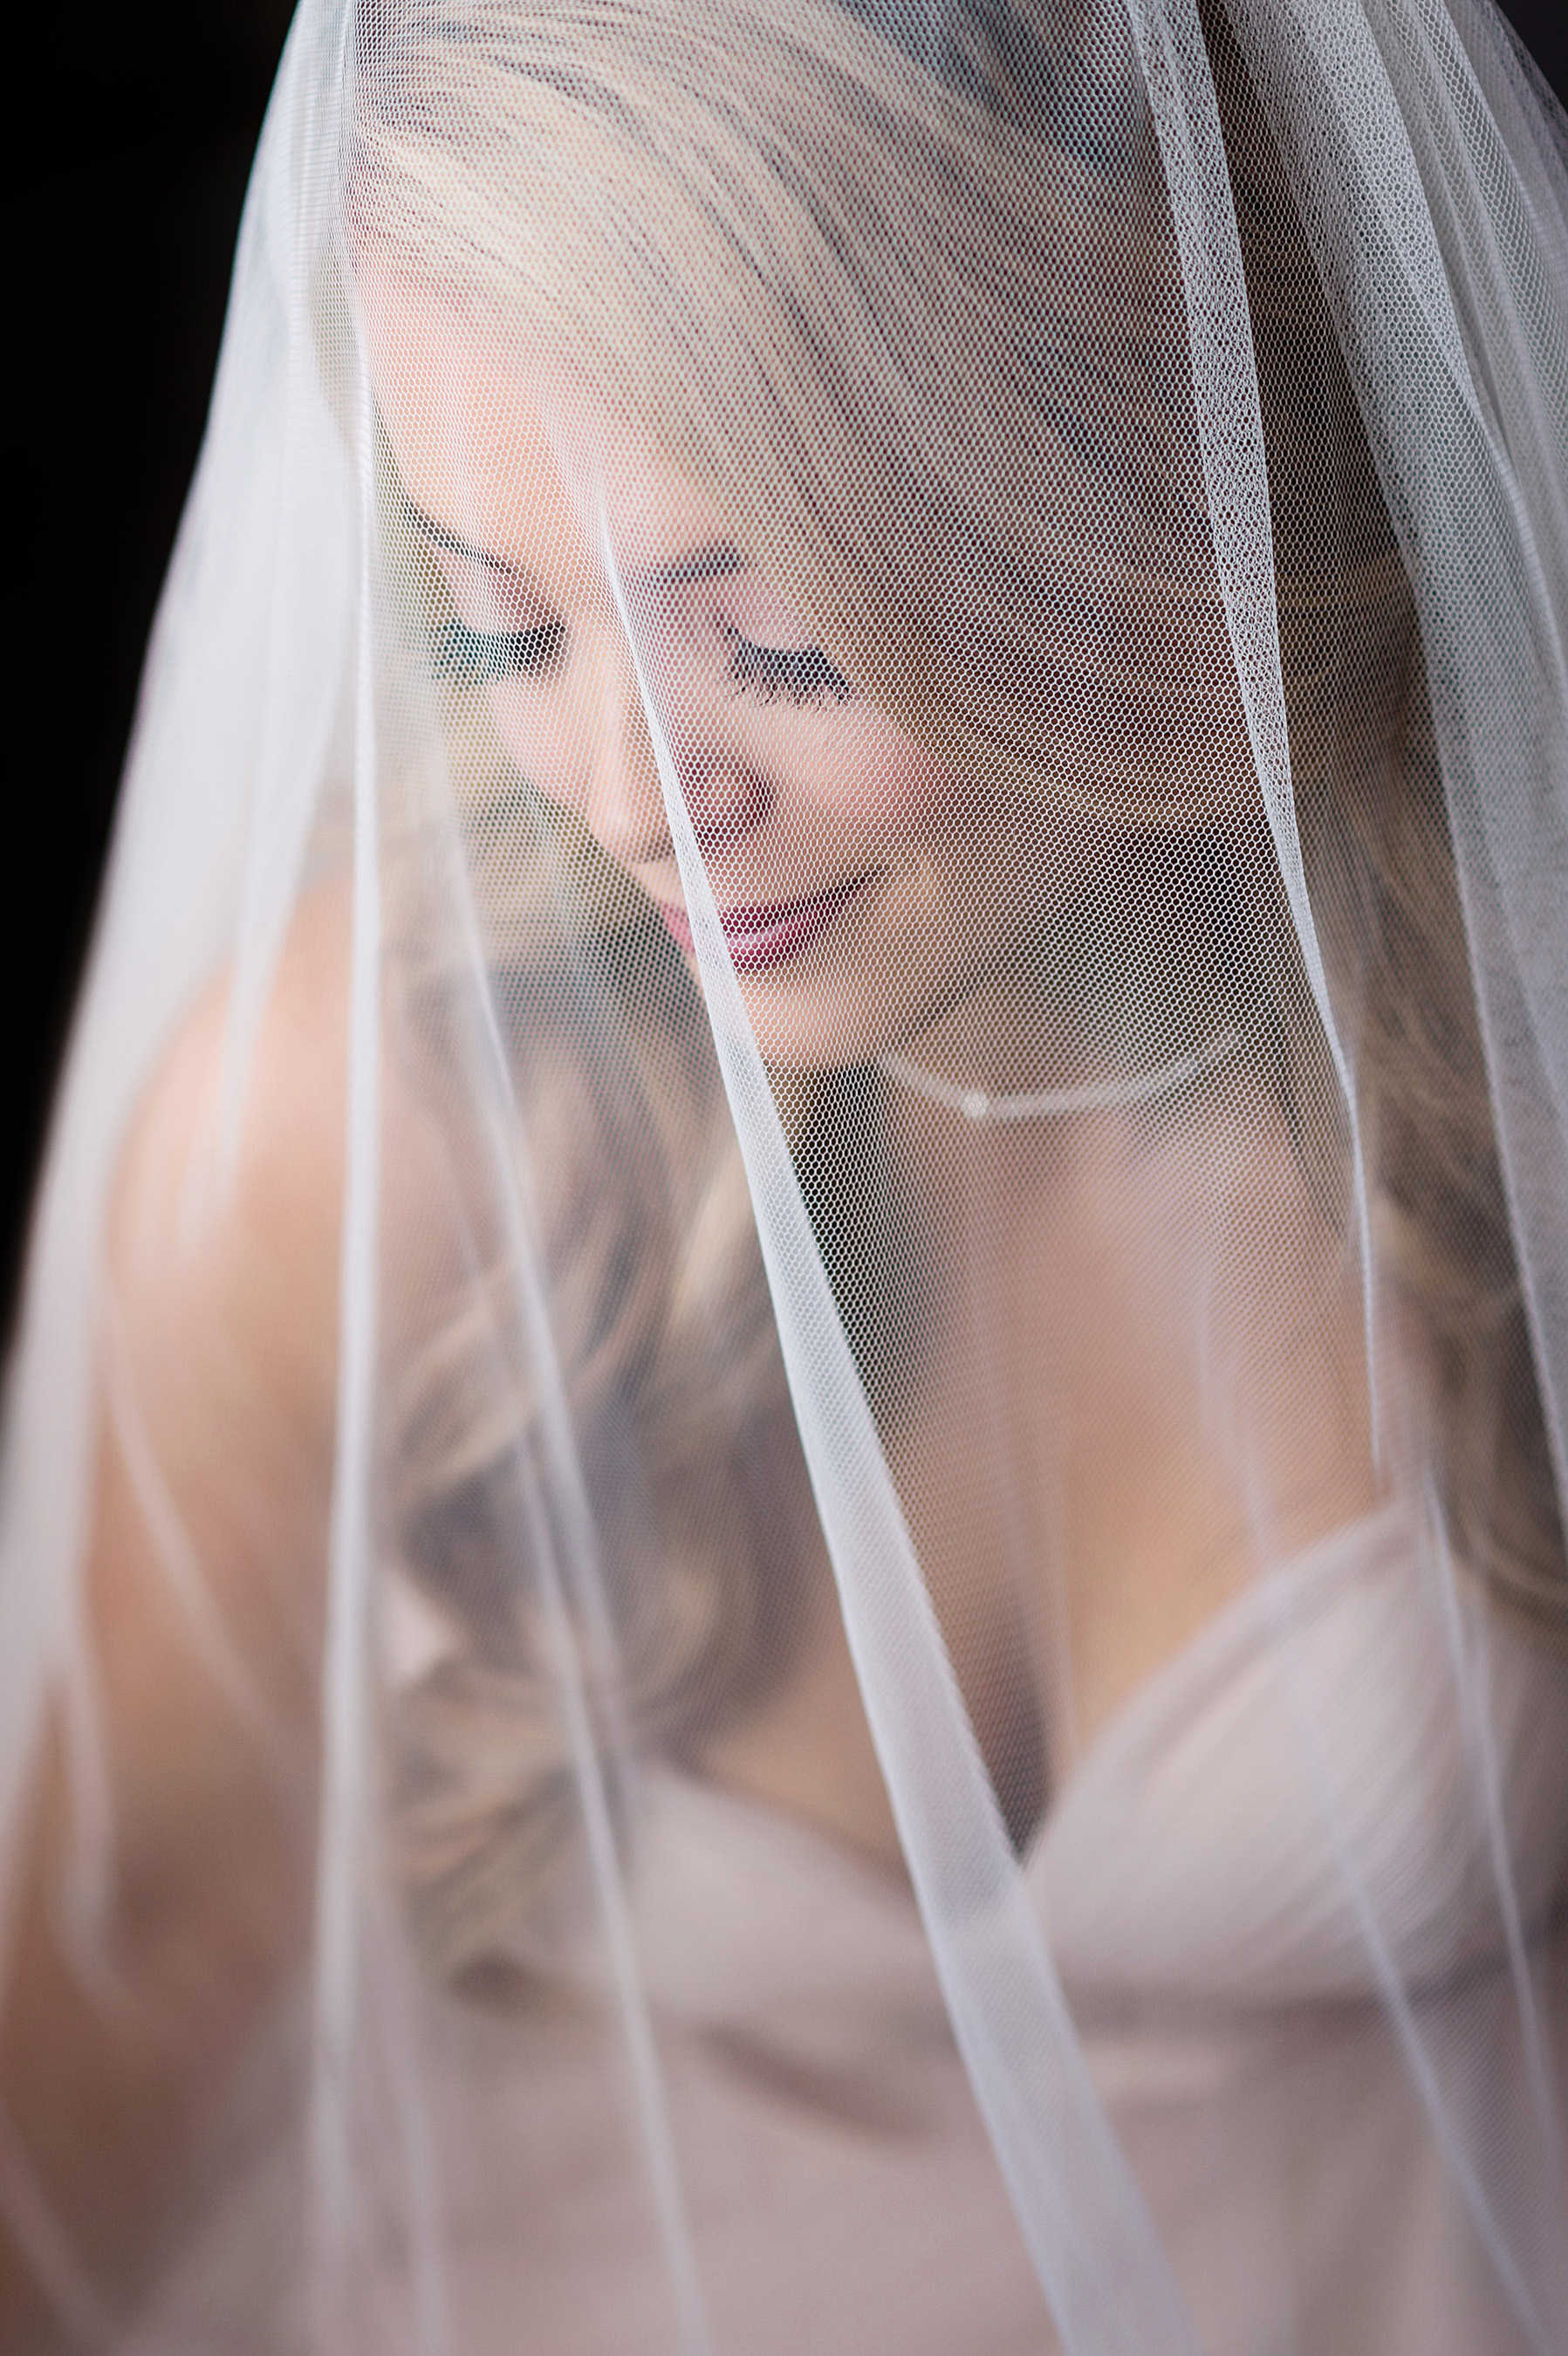 bridal portrait by ashley fisher photography